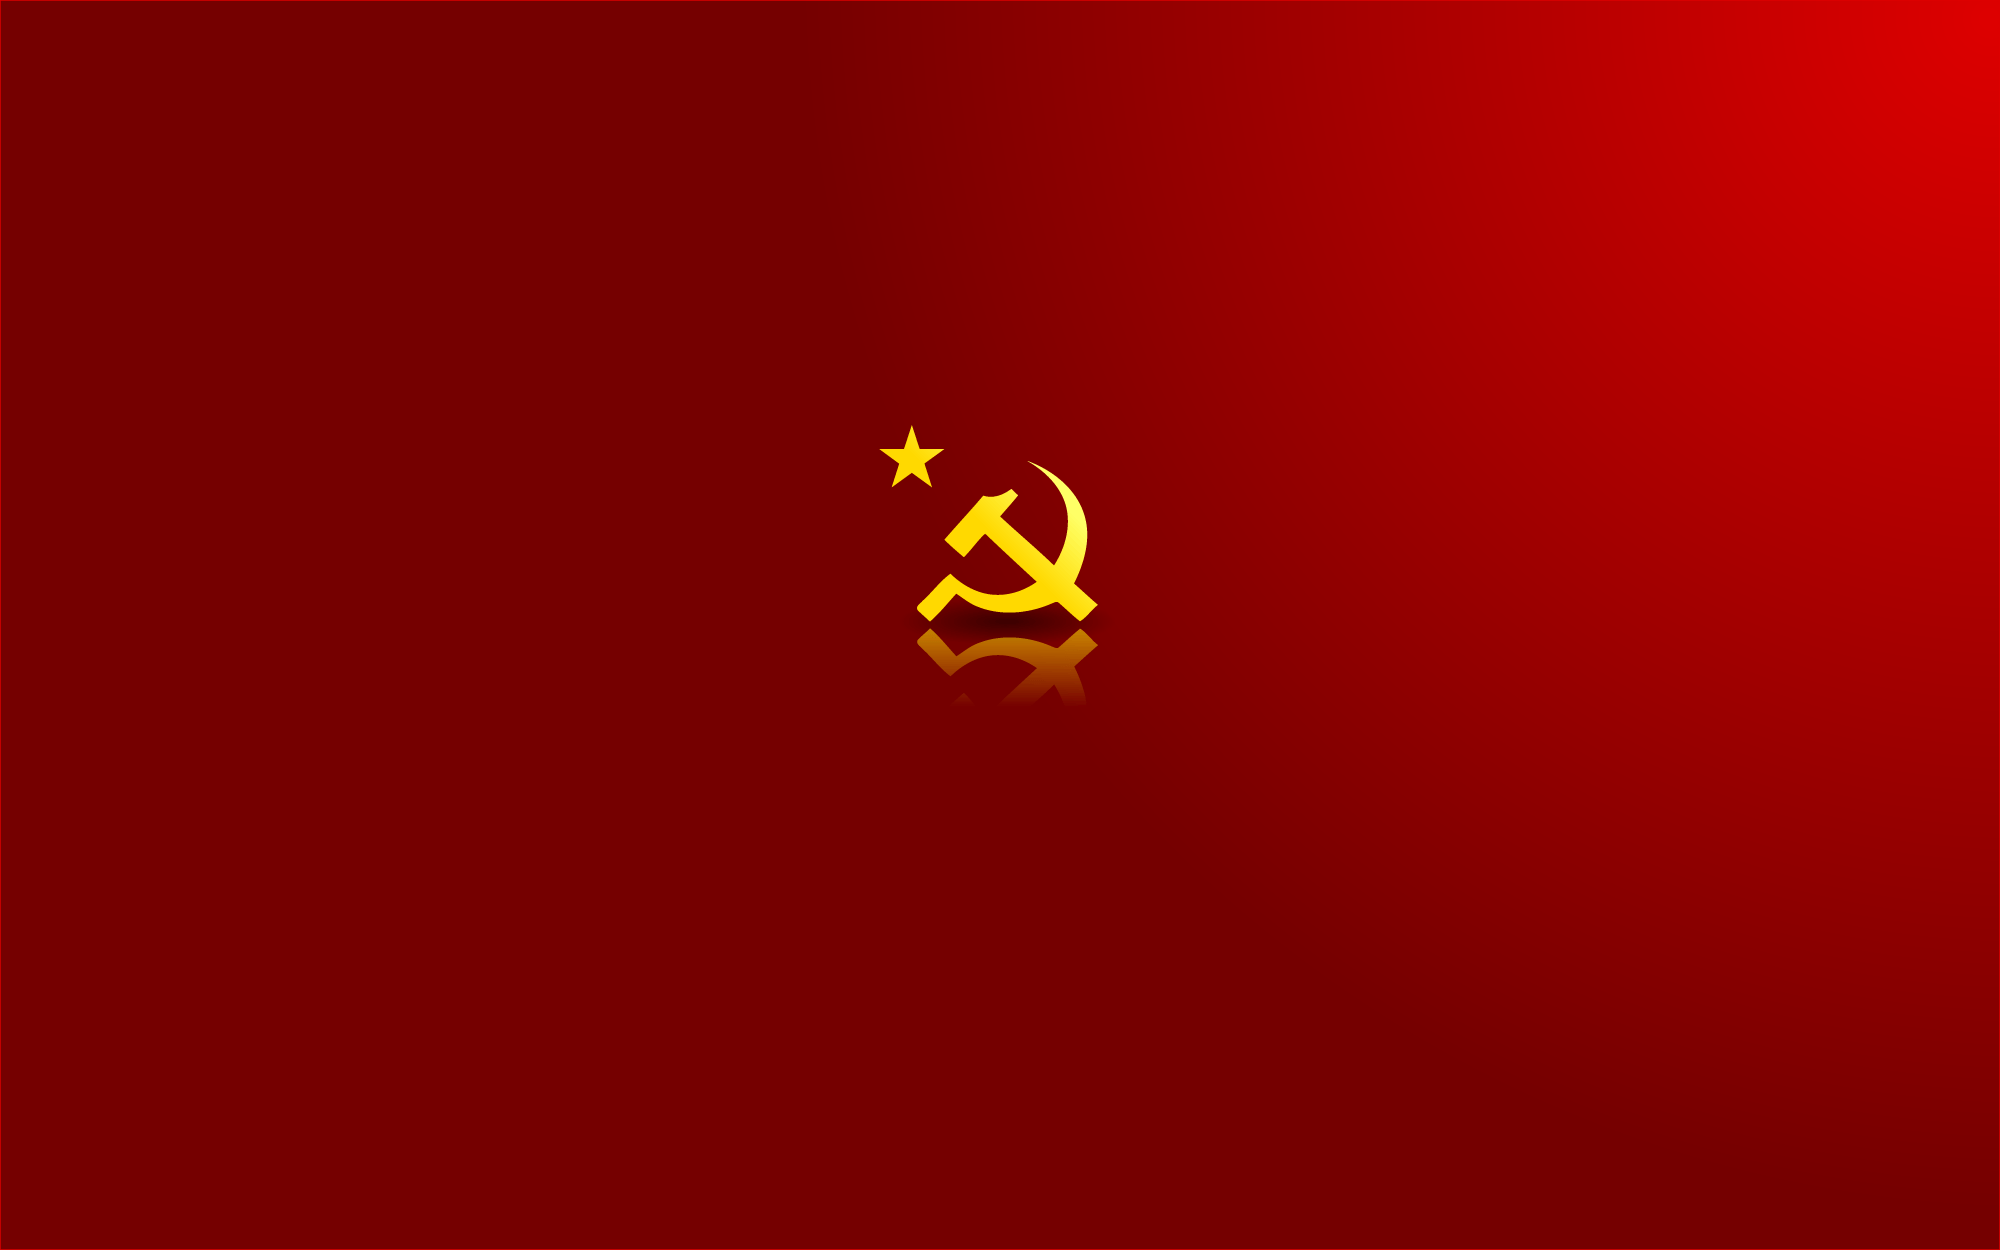 Soviet union term paper